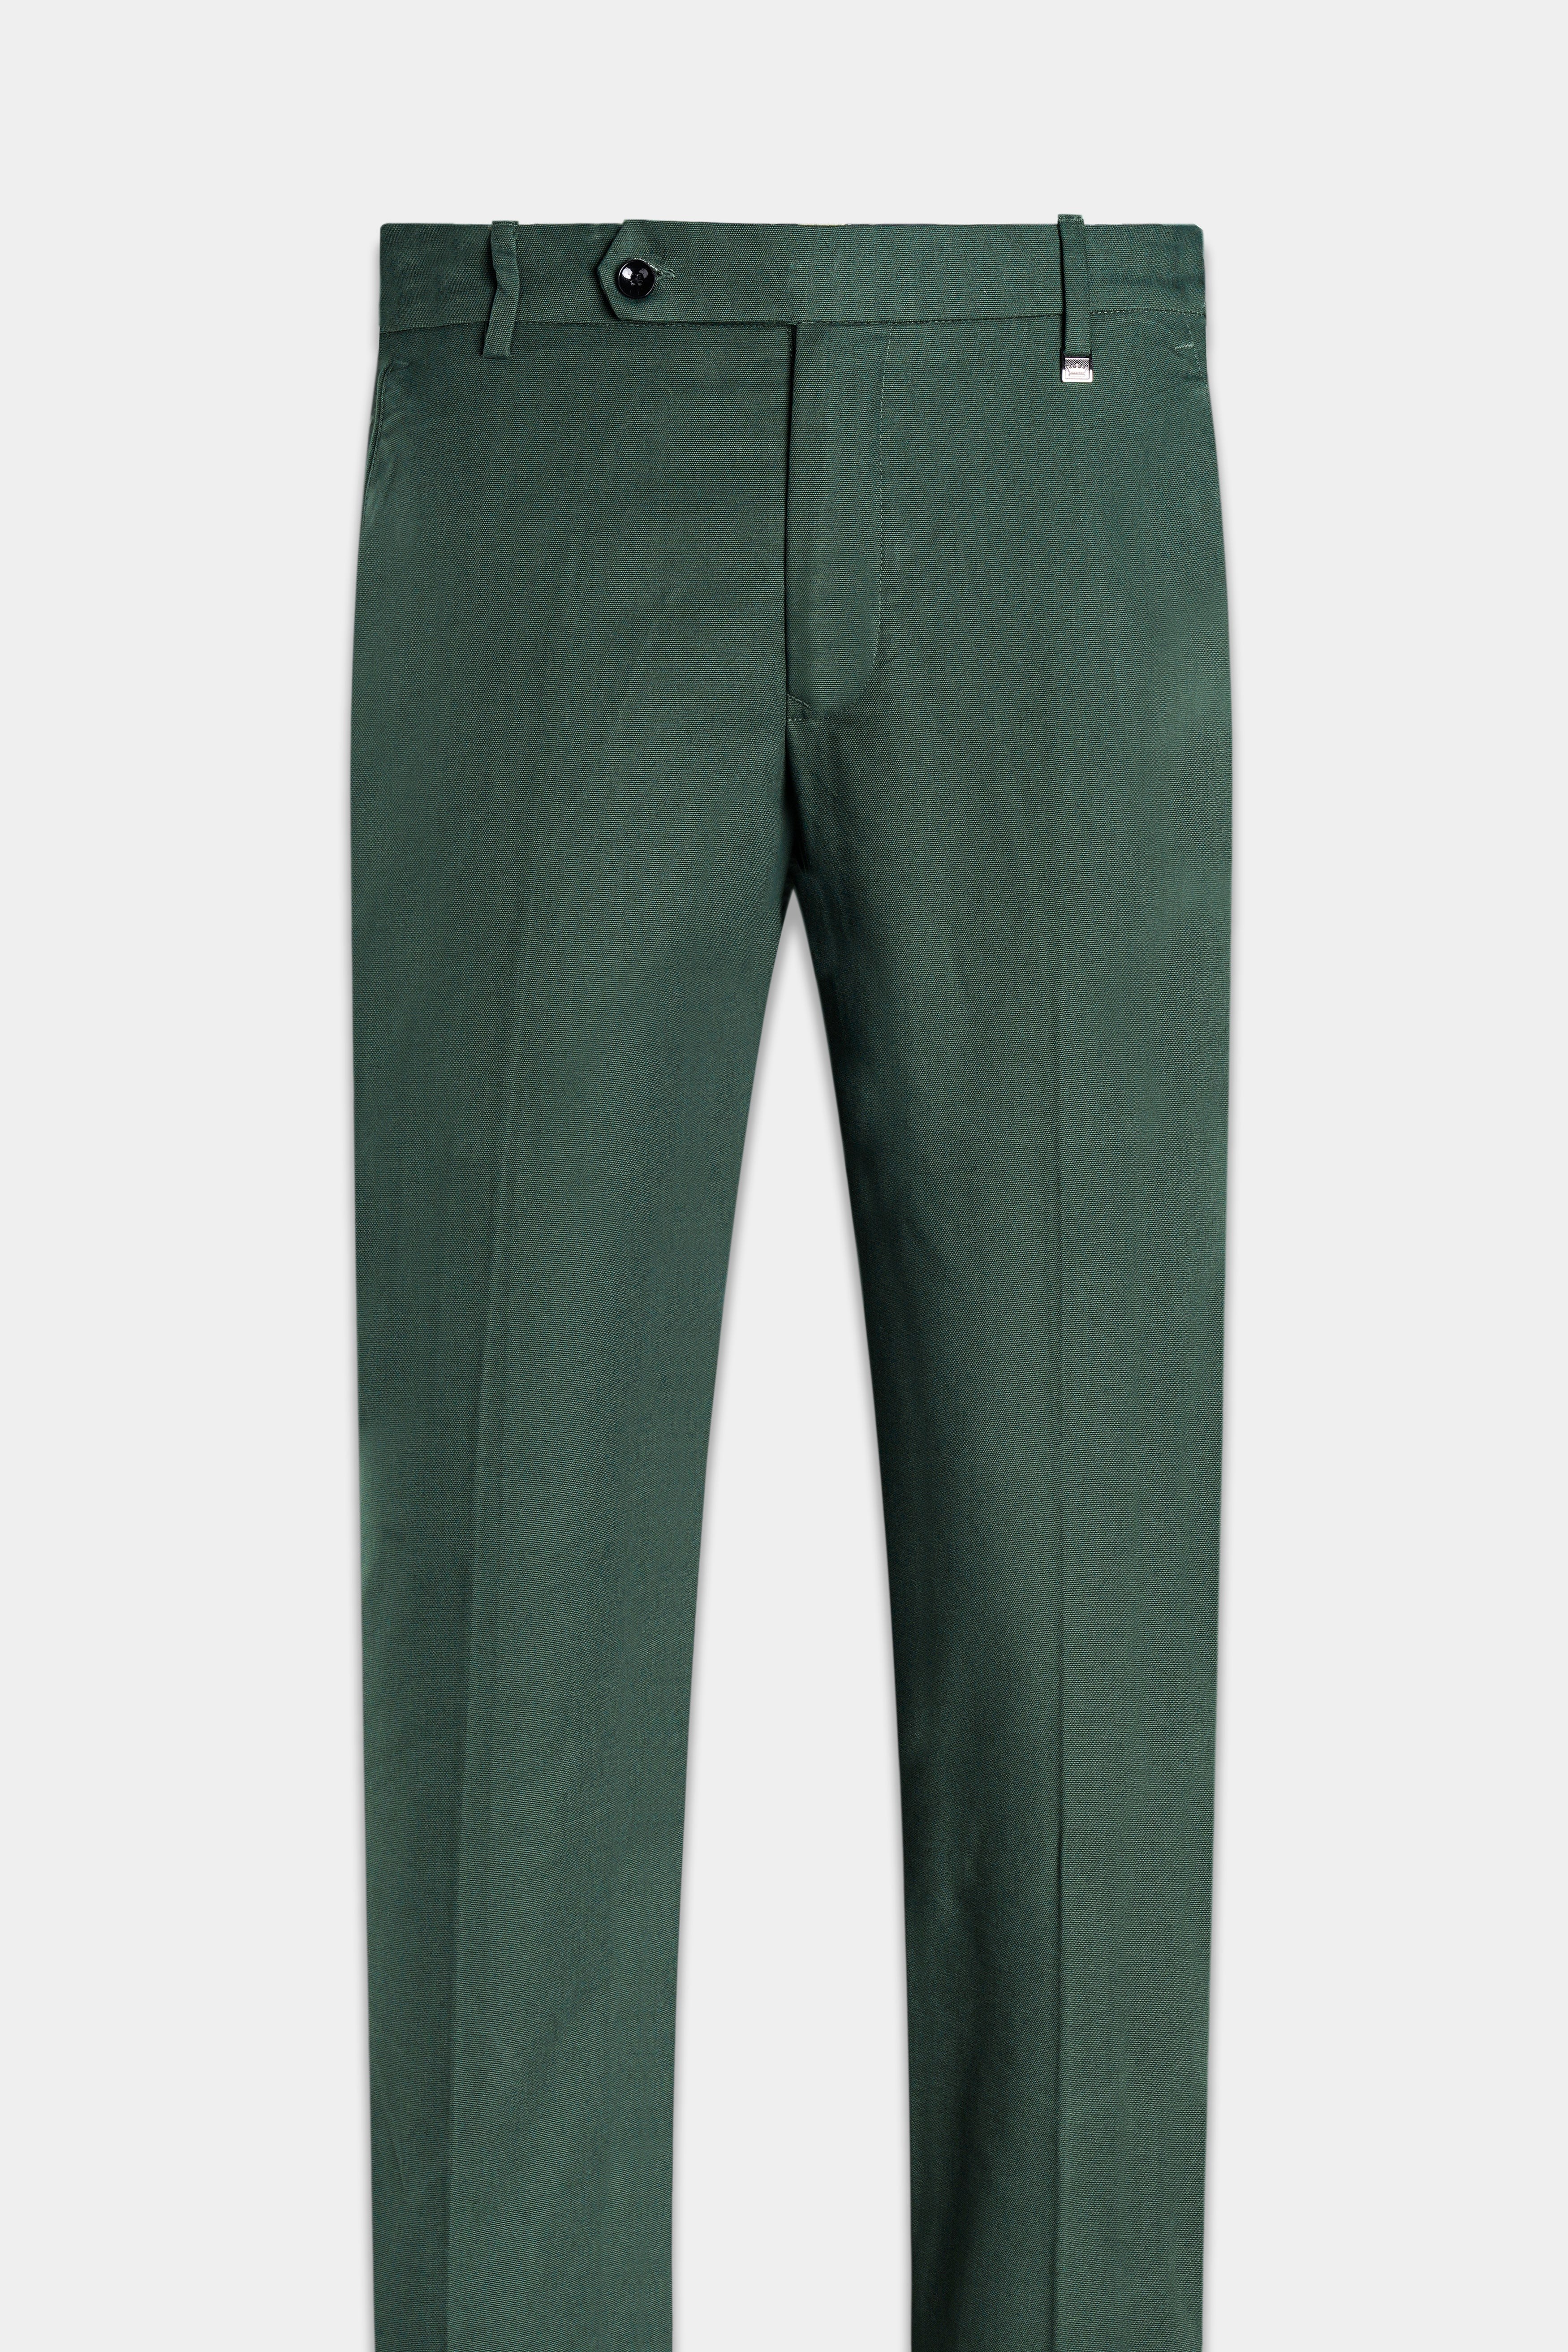 2 Piece Mint Green Blazer Trousers Men Suit Wedding Groom Outfit For Men  Slim Fit Formal Jacket+Pants Costume Homme Summer Wear - AliExpress